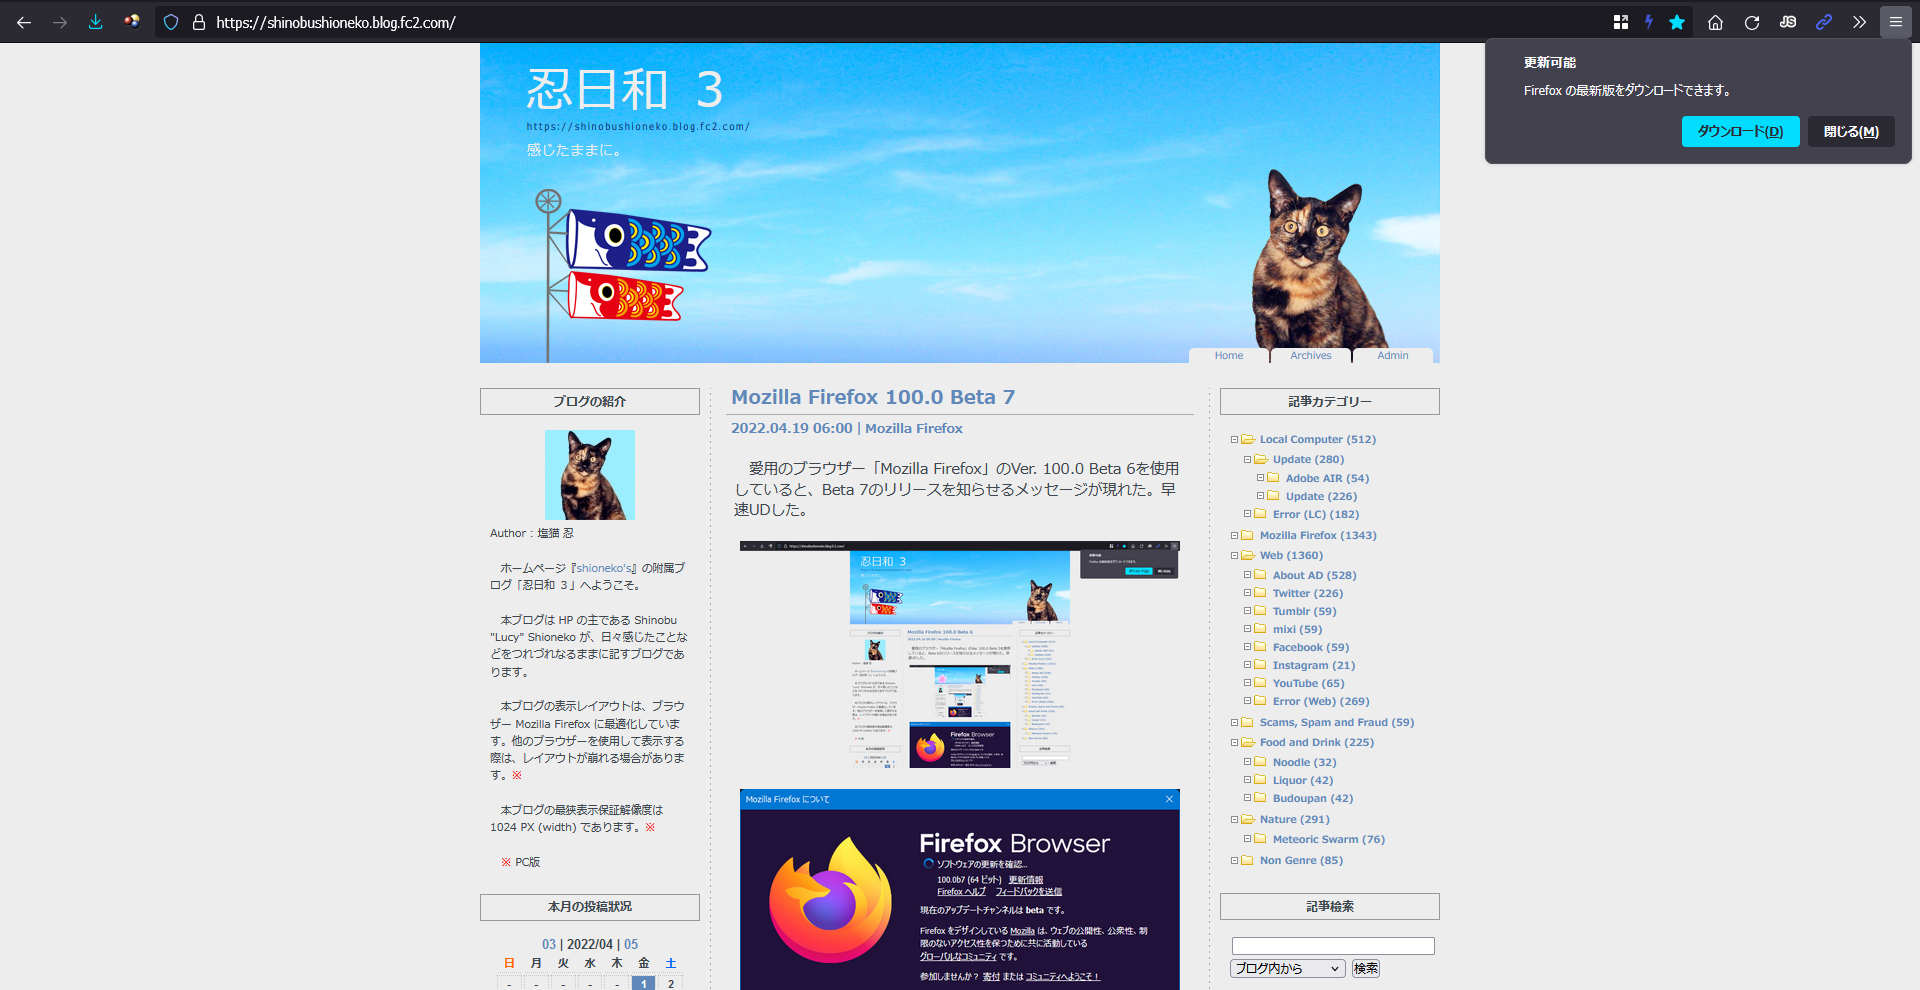 Mozilla Firefox 100.0 Beta 9